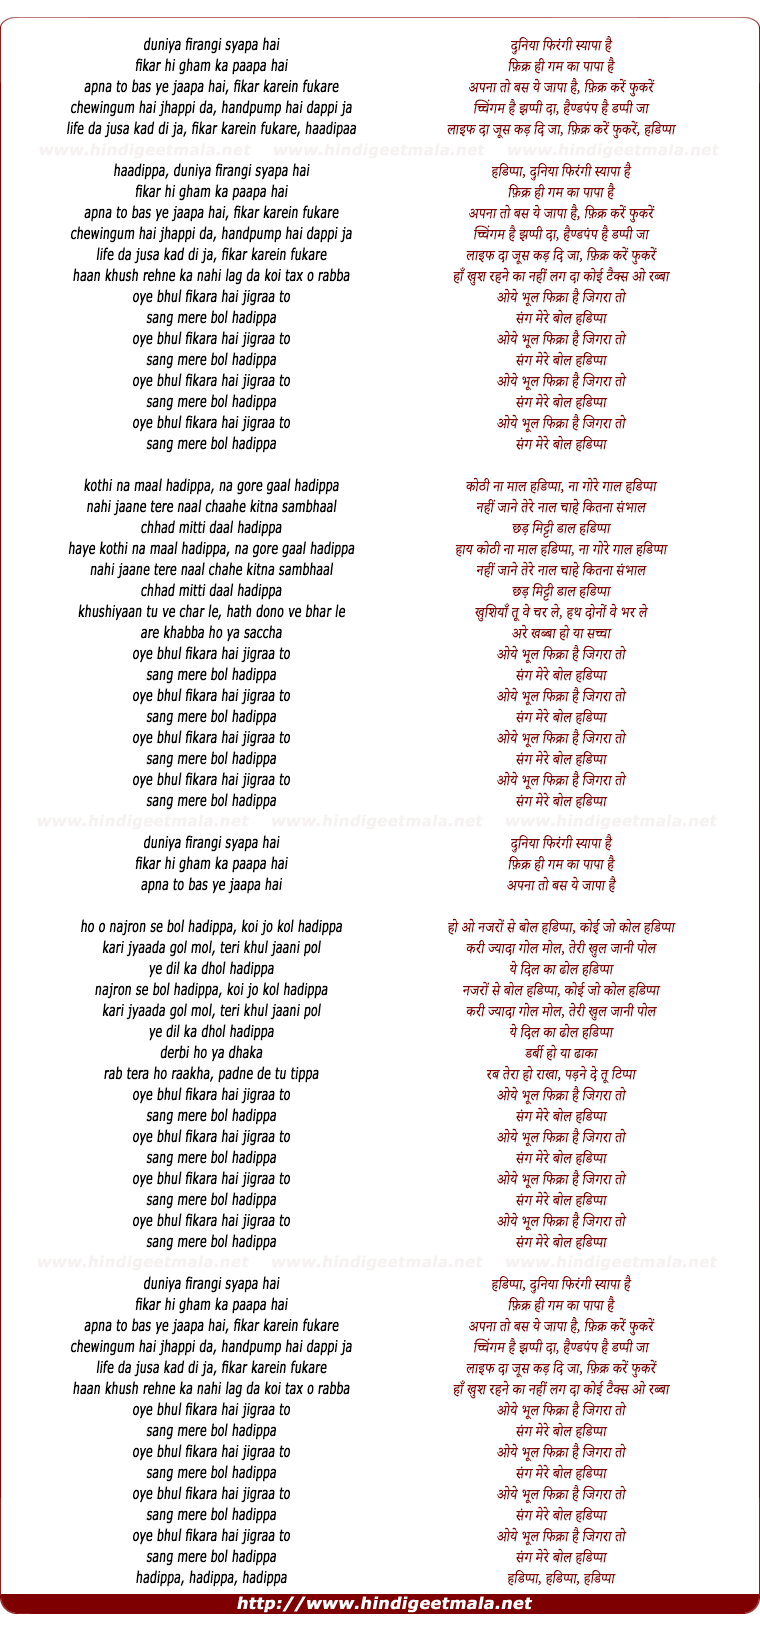 lyrics of song Hadippa